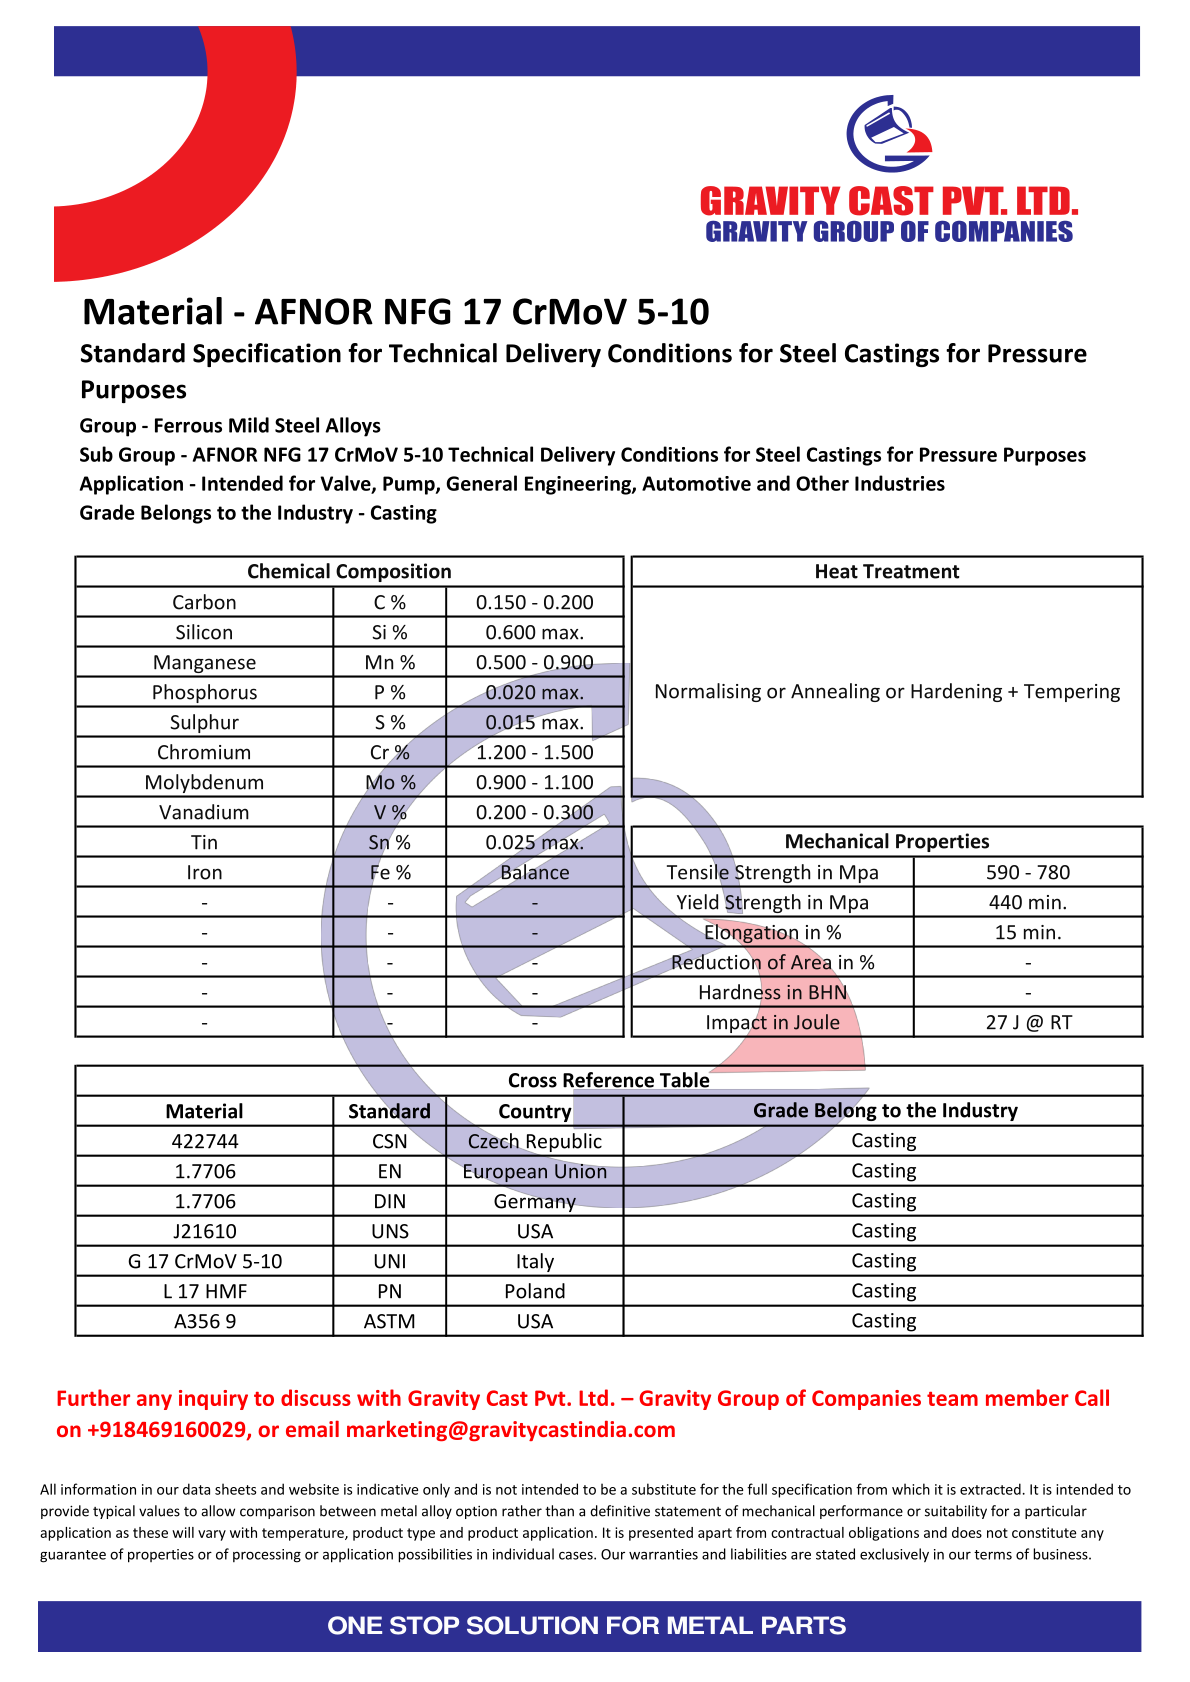 AFNOR NFG 17 CrMoV 5-10.pdf